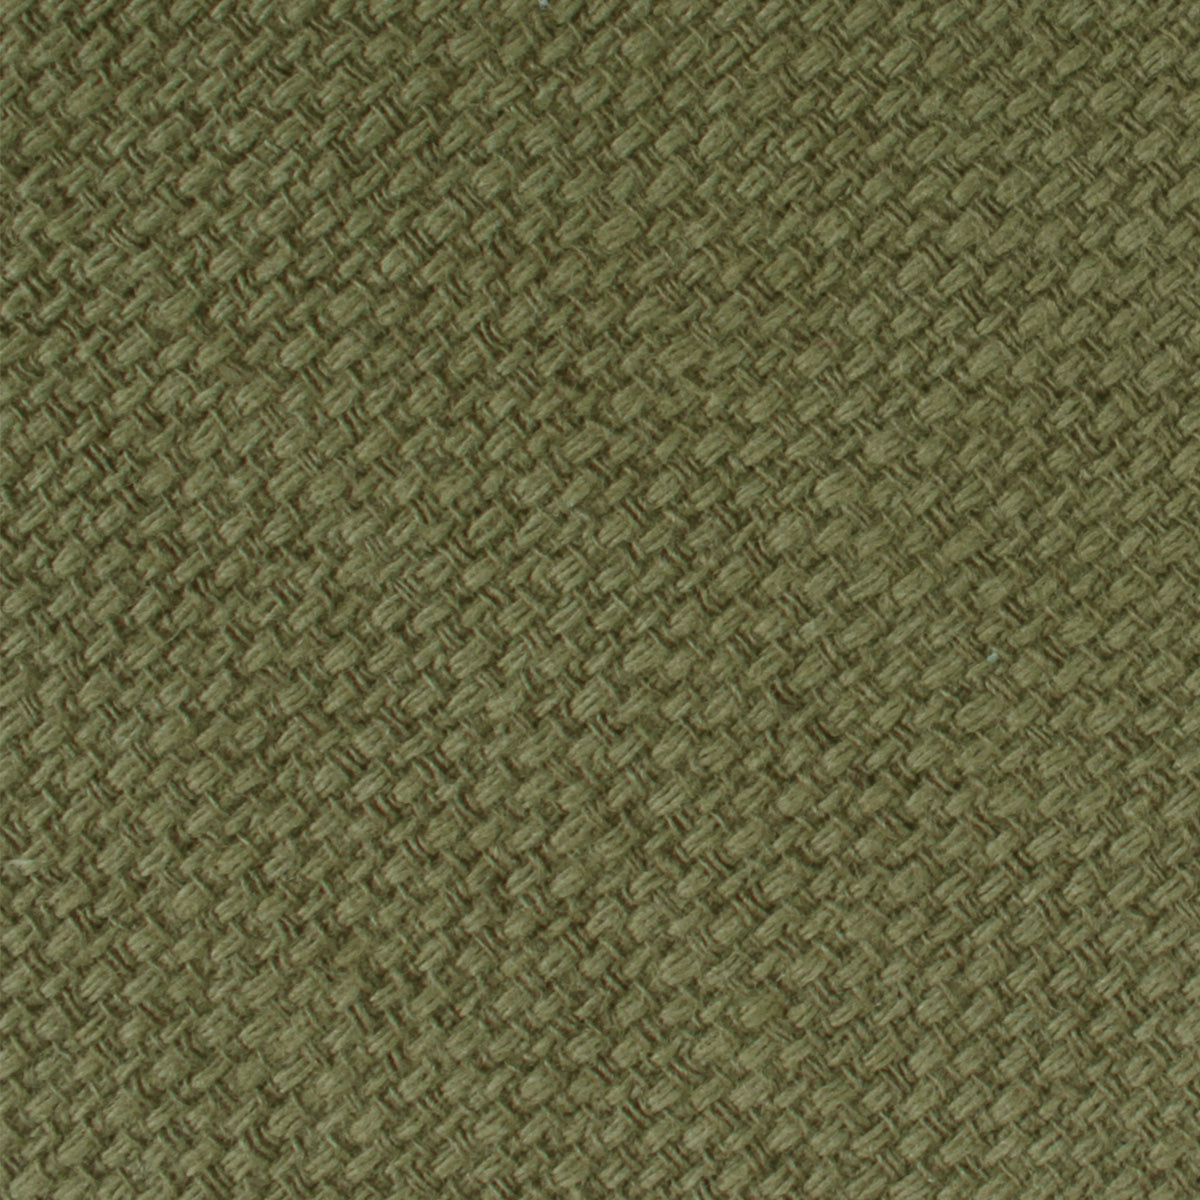 Olive Green Basket Weave Linen Kids Bow Tie Fabric